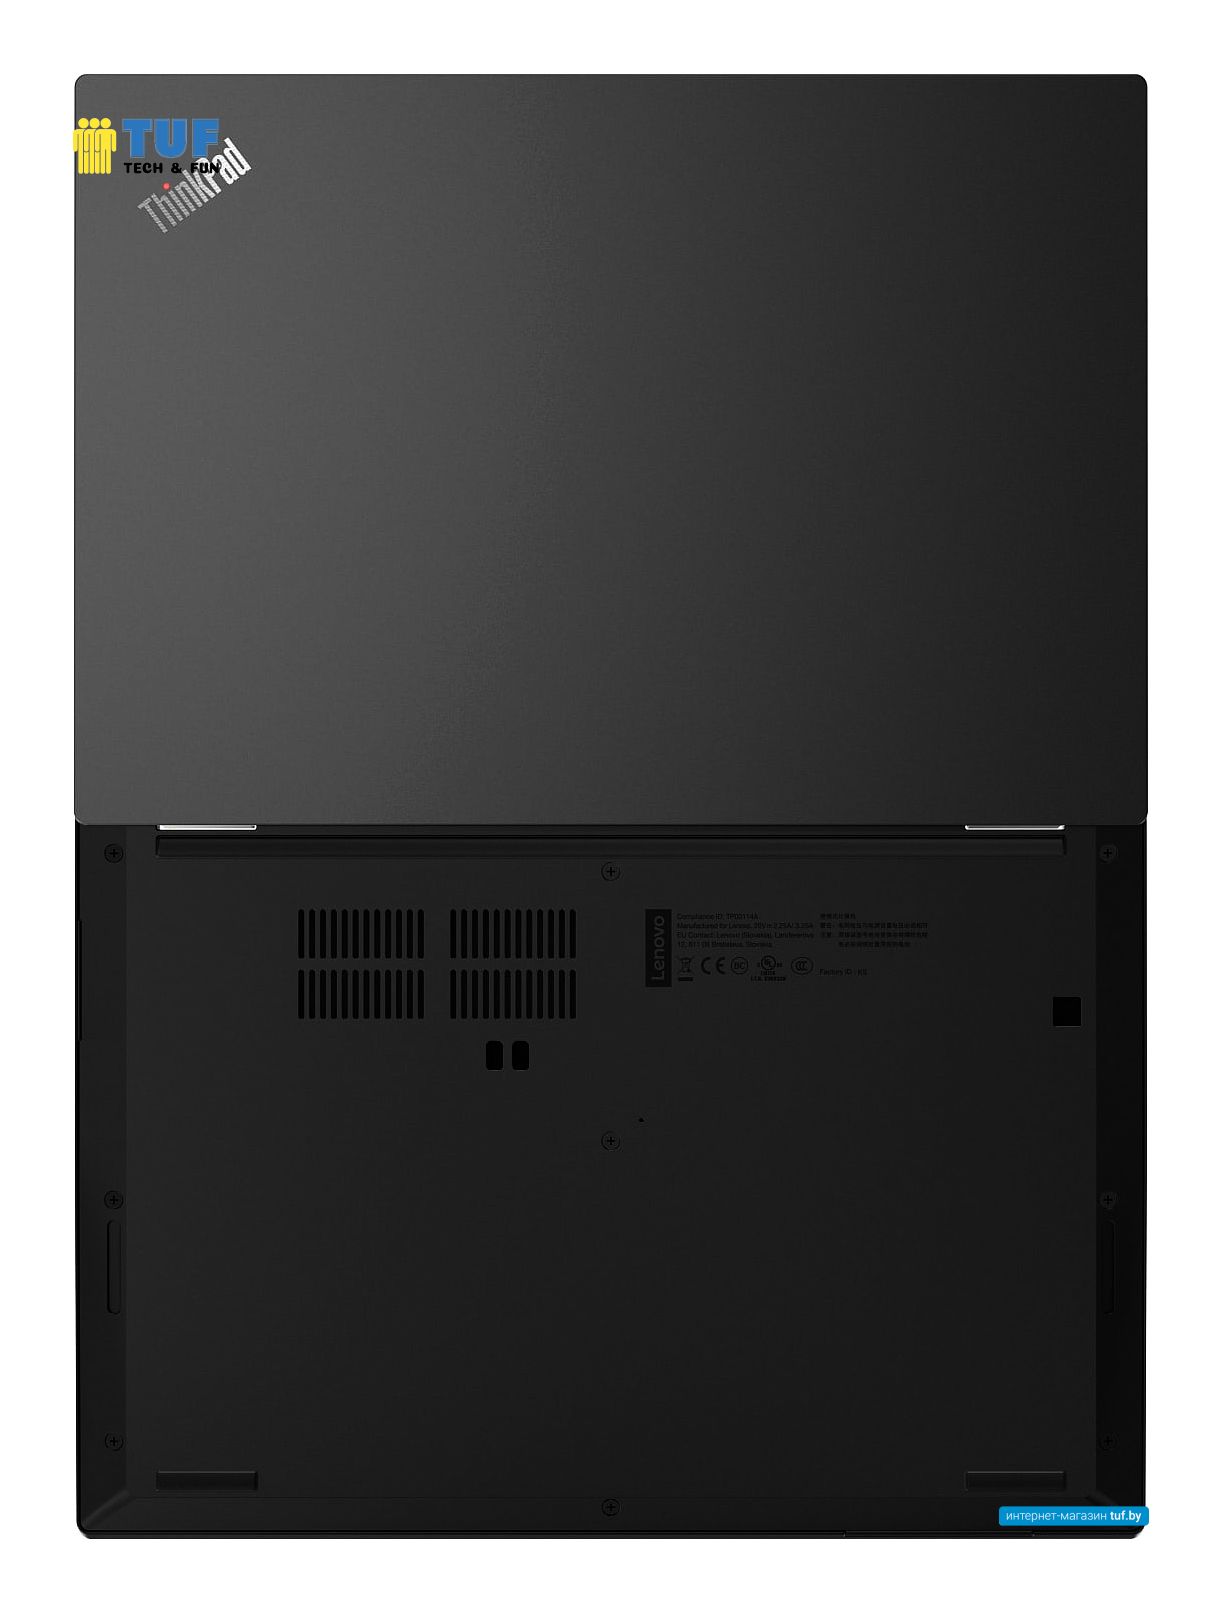 Ноутбук Lenovo ThinkPad L13 Gen 2 Intel 20VH001ART